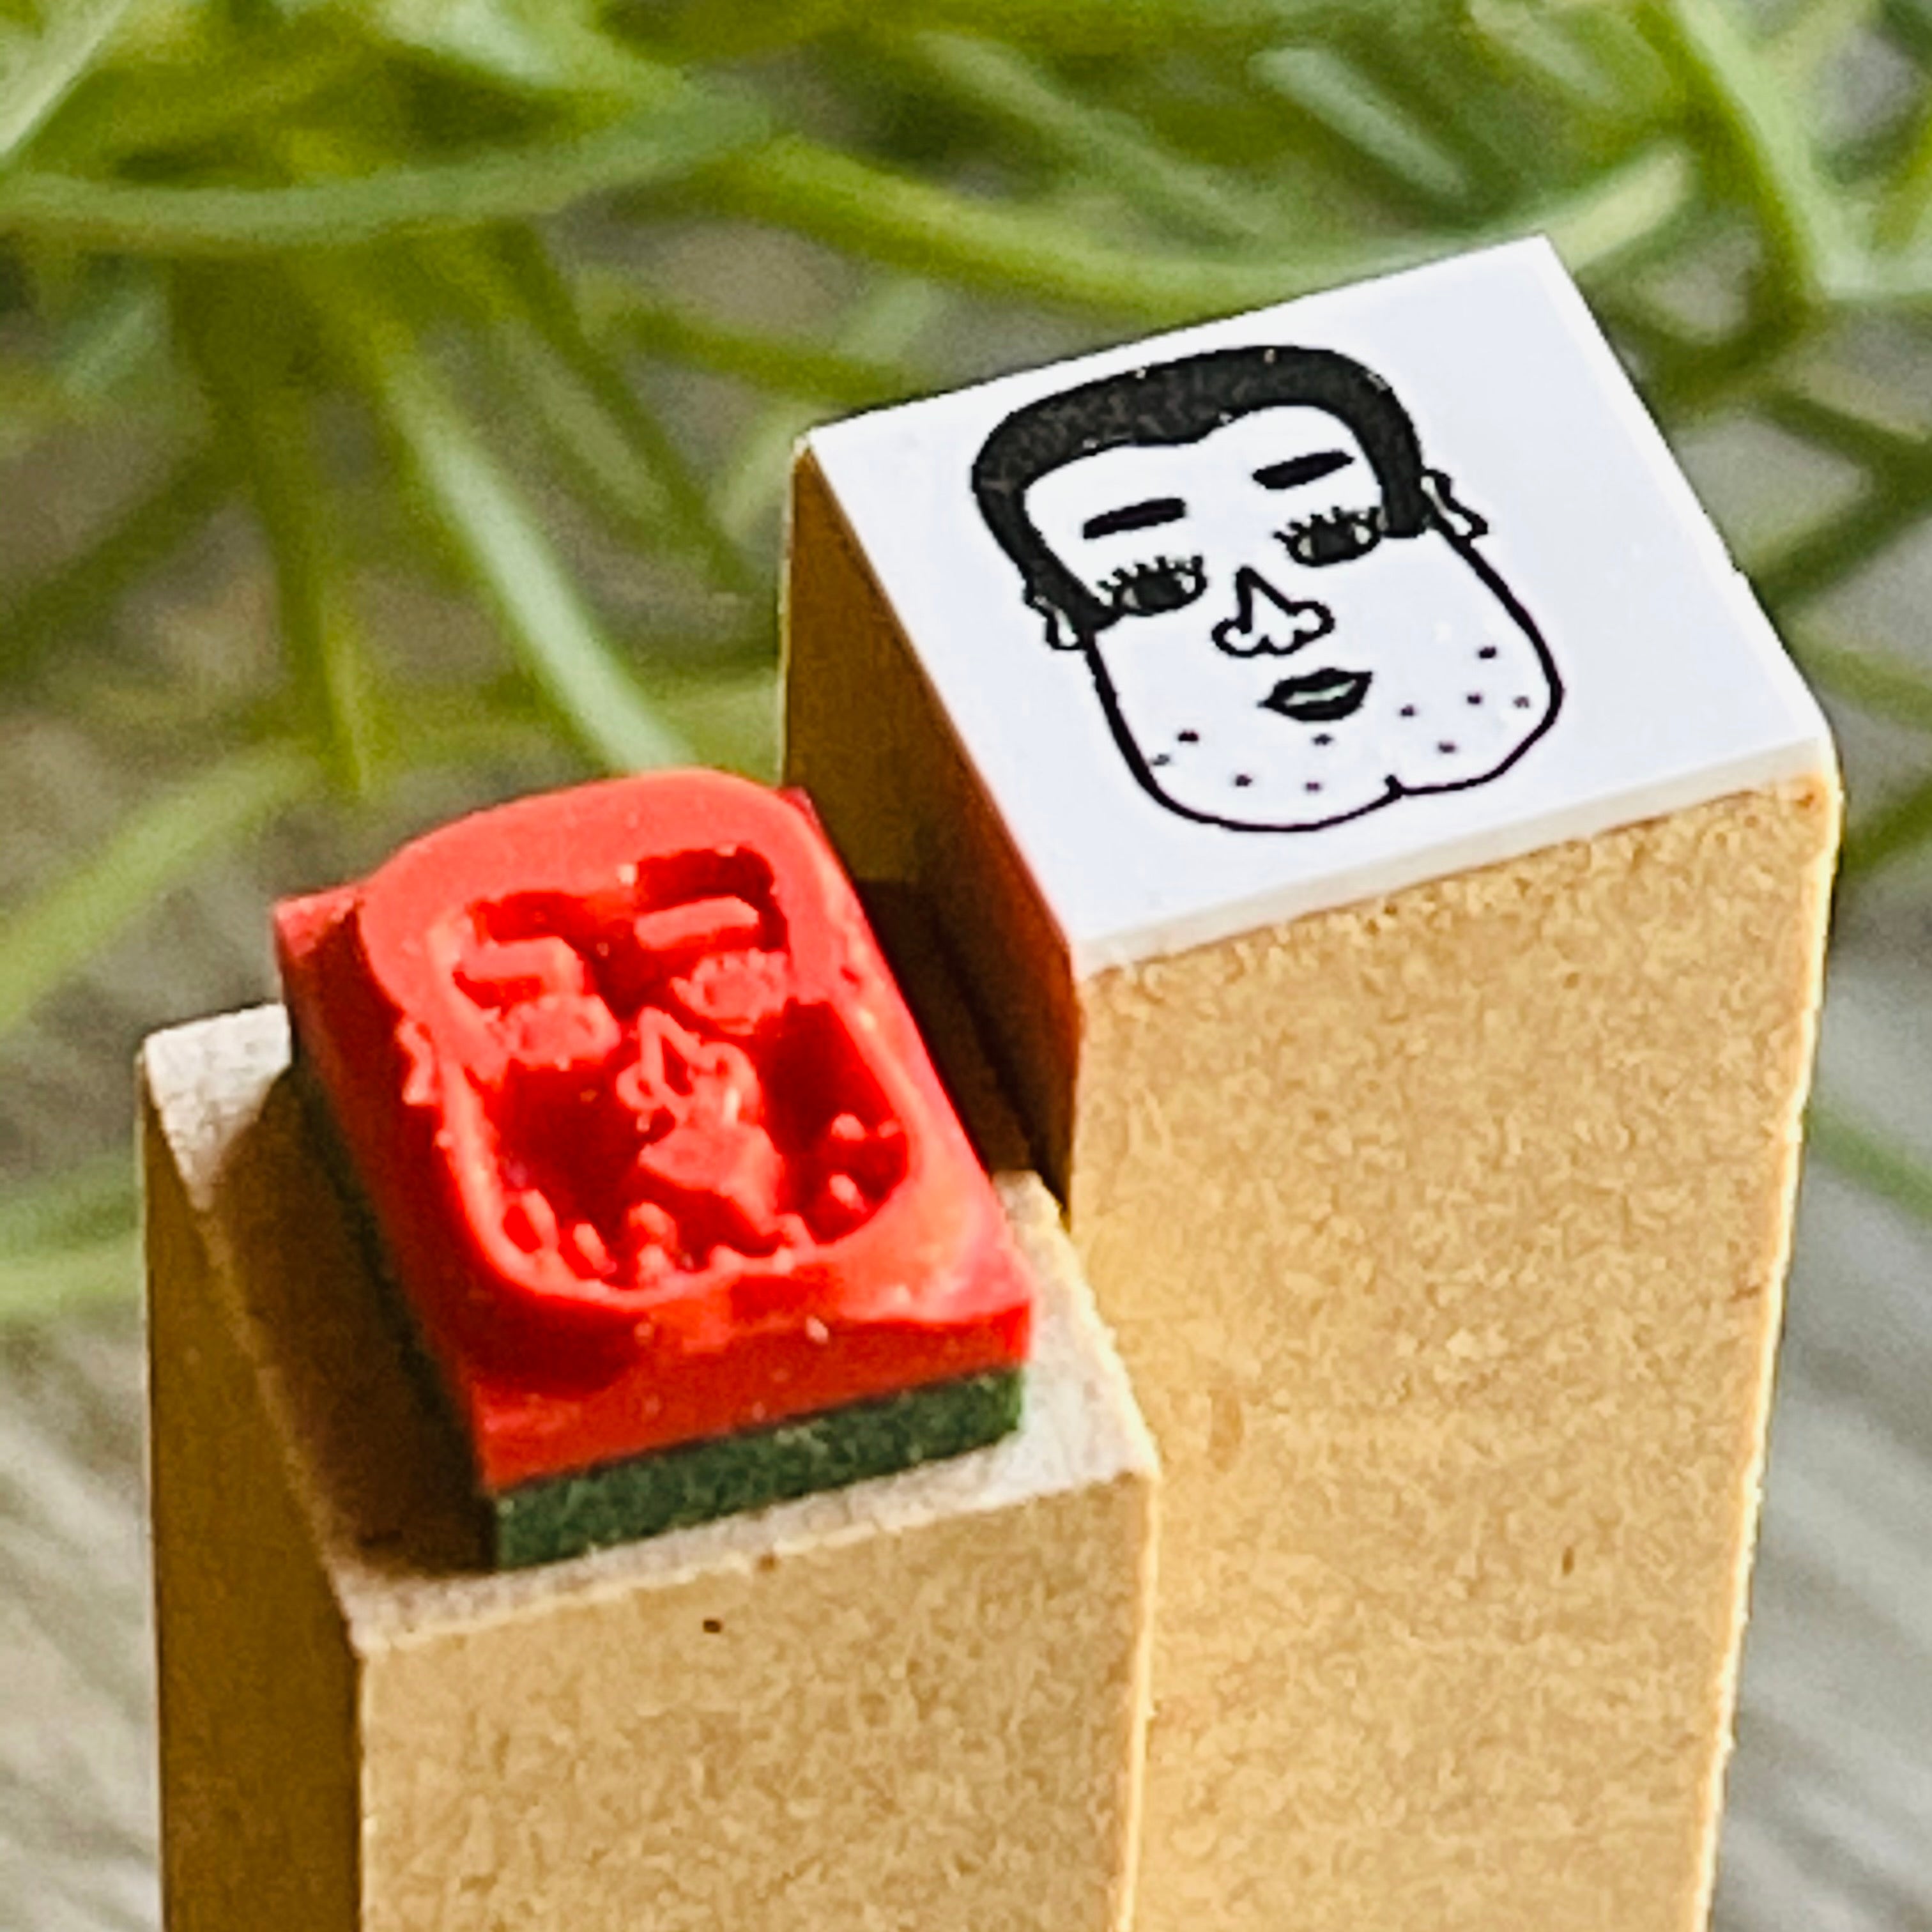 Wada Fukuo-kun "Mini Mini Face Stampe"